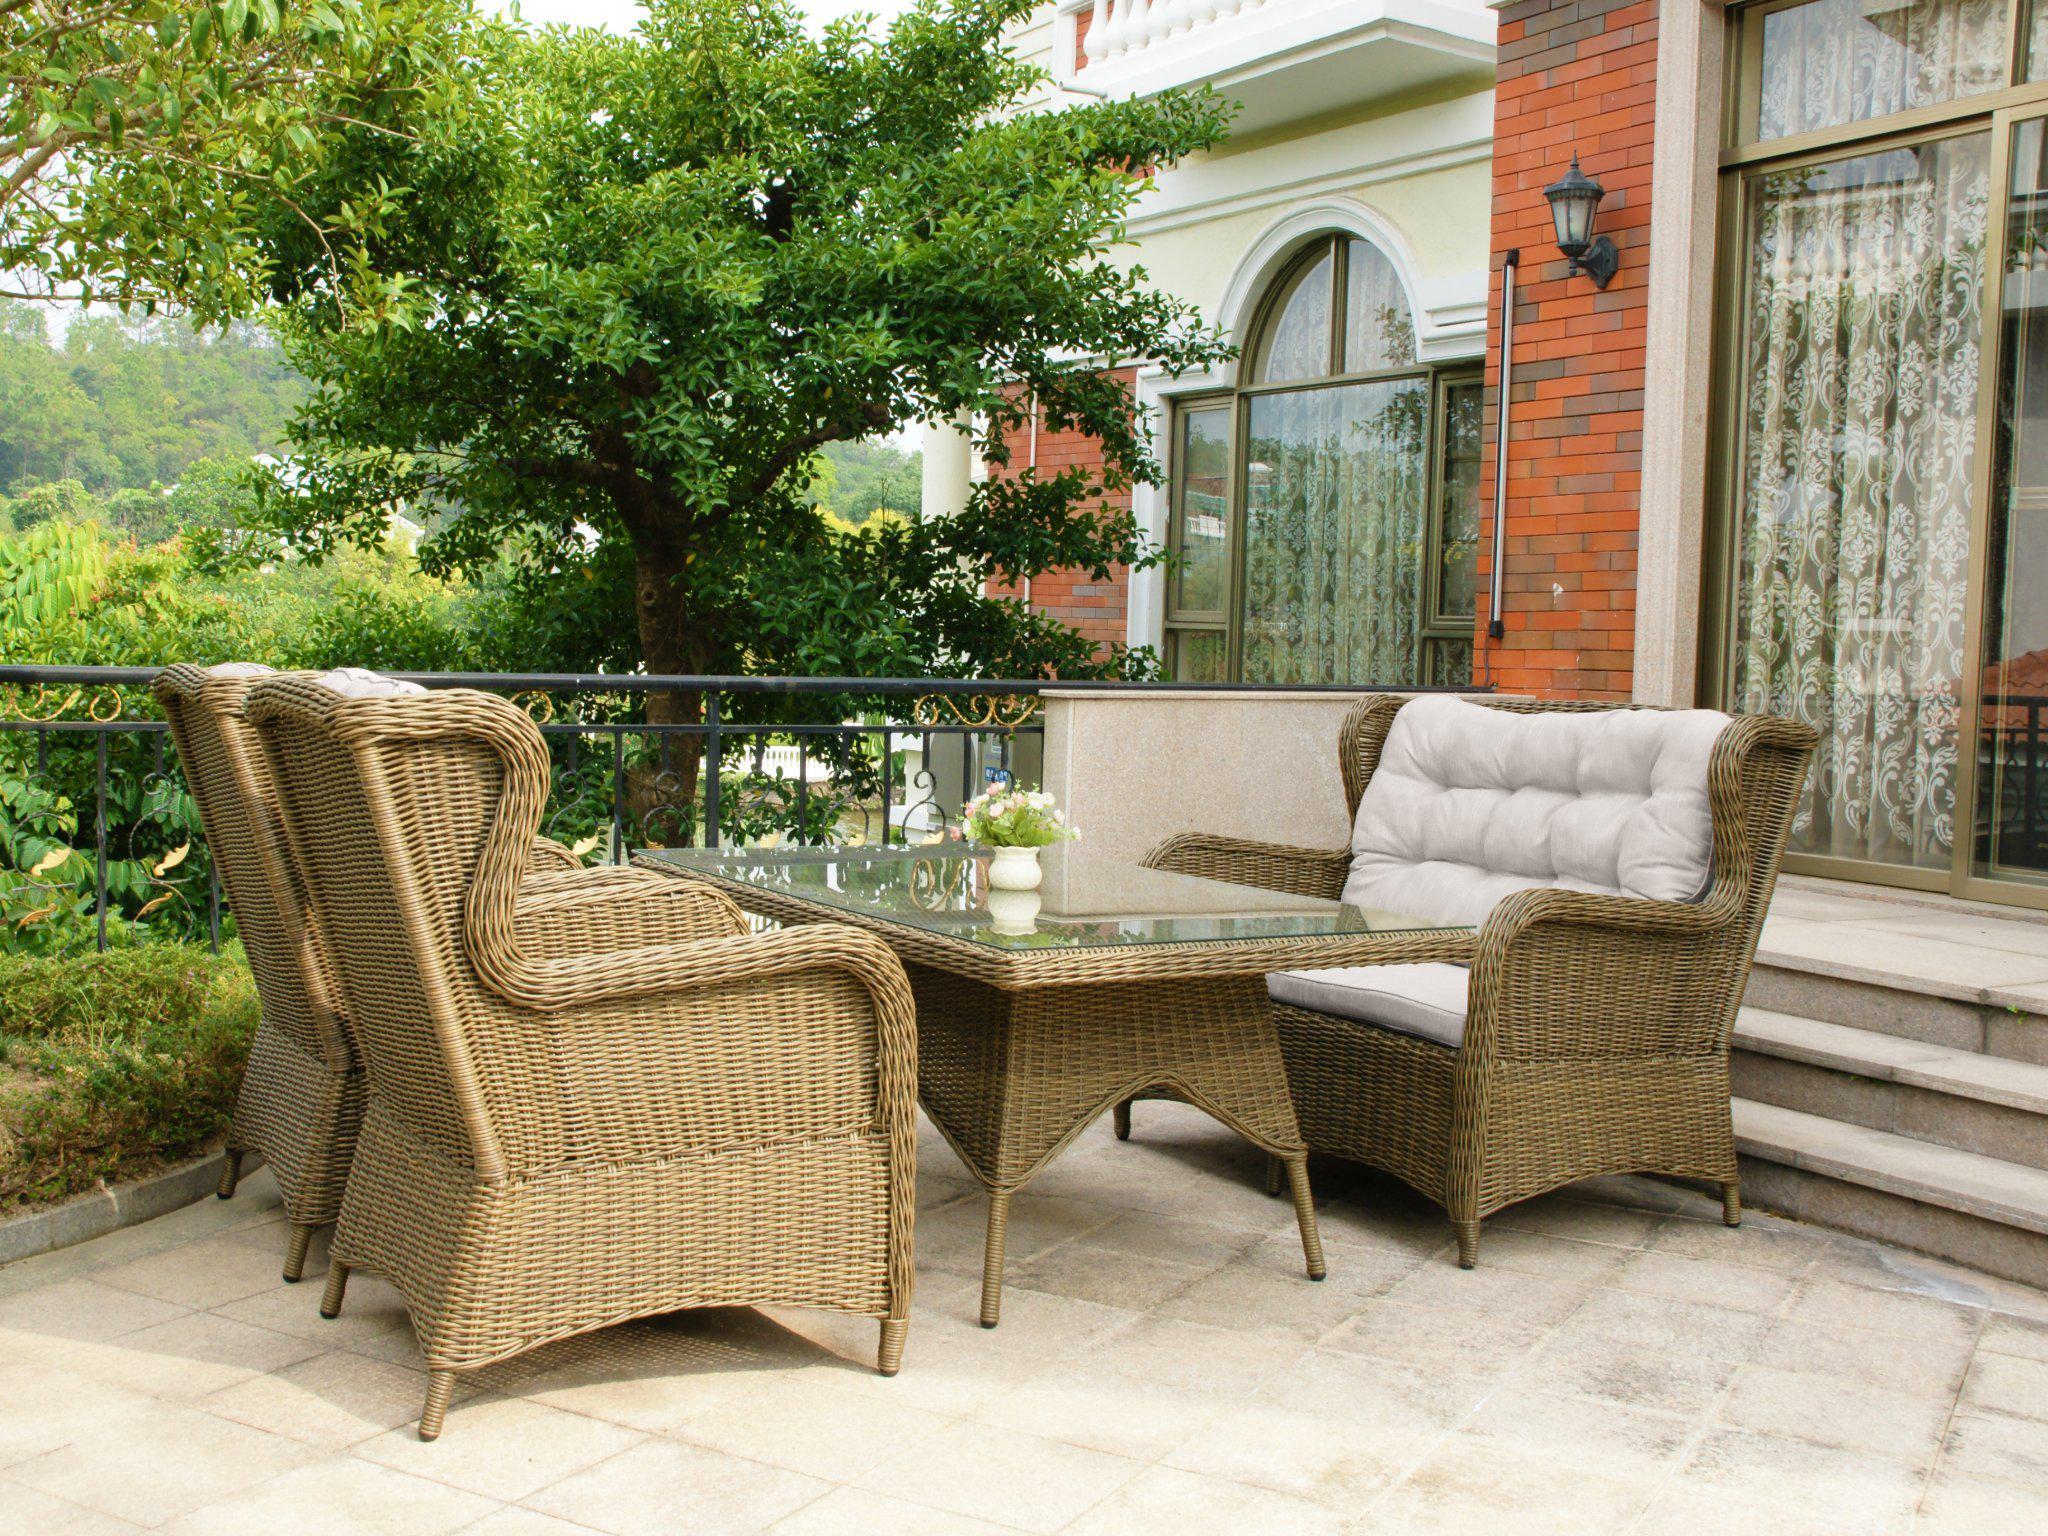 Backyard Area Upgrades Using Wicker Outdoor Furniture